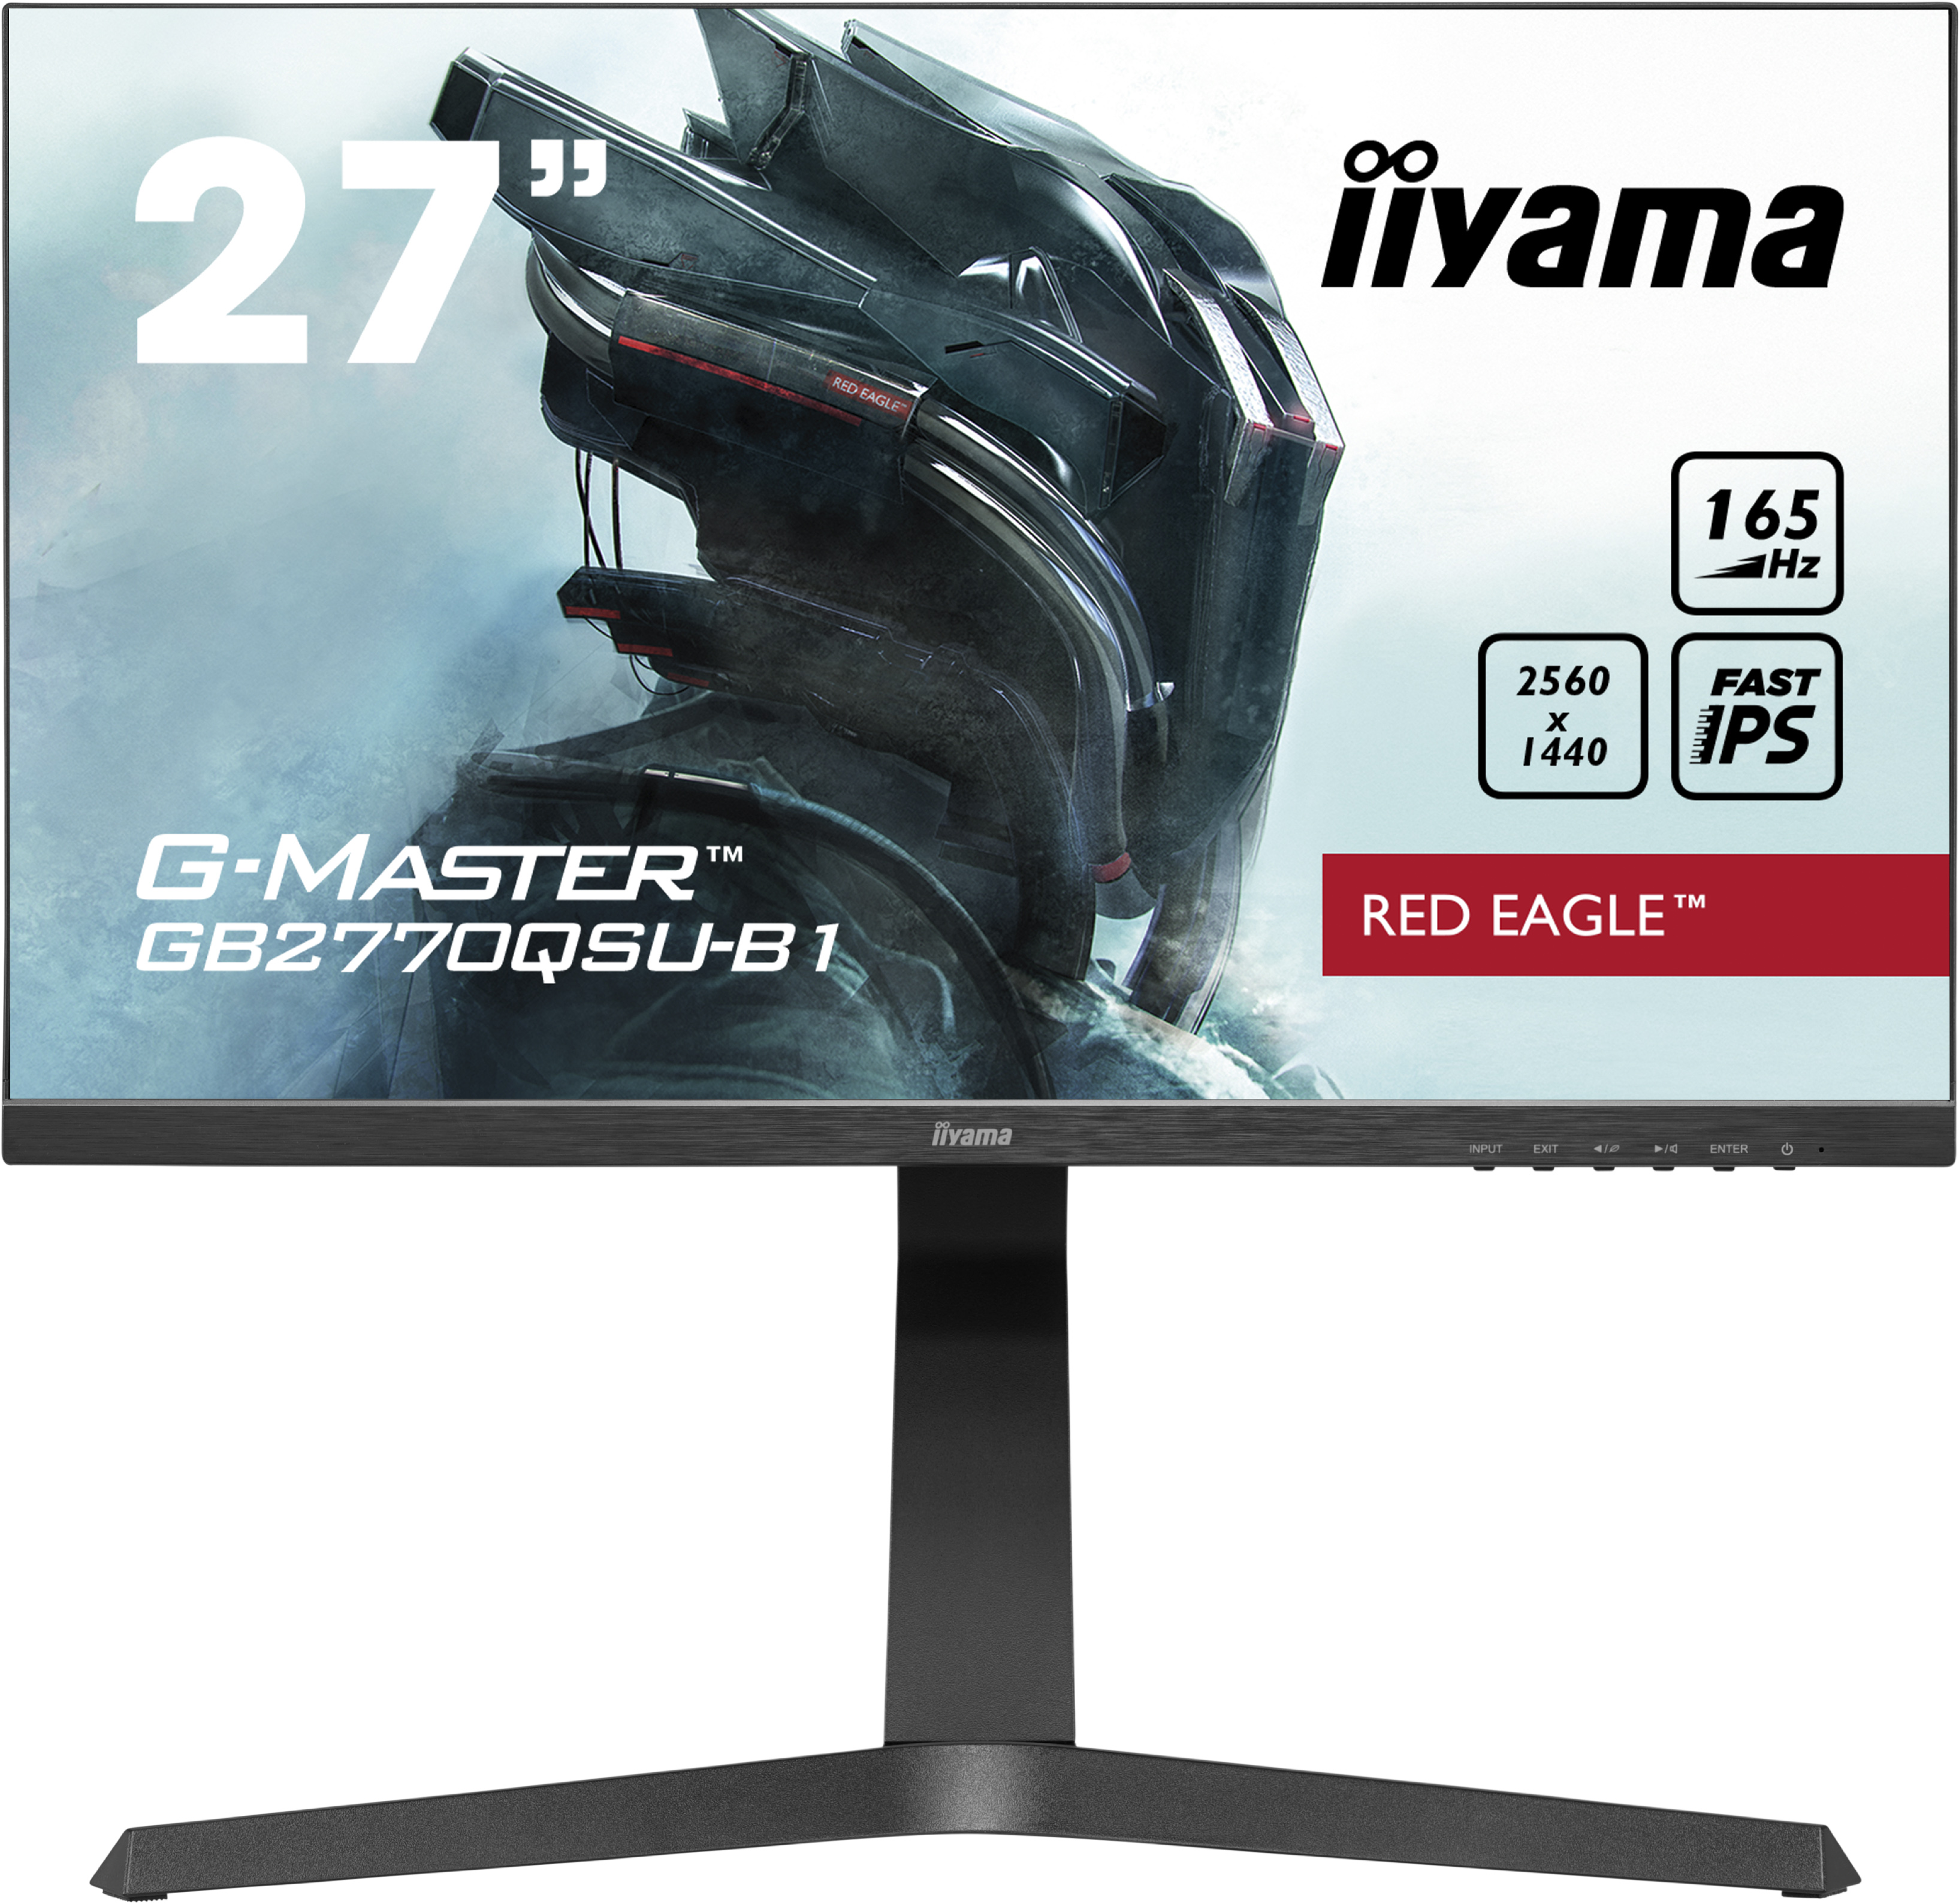 Iiyama G-MASTER GB2770QSU-B1 RED EAGLE | 27" | 165Hz | WQHD | Gaming Monitor